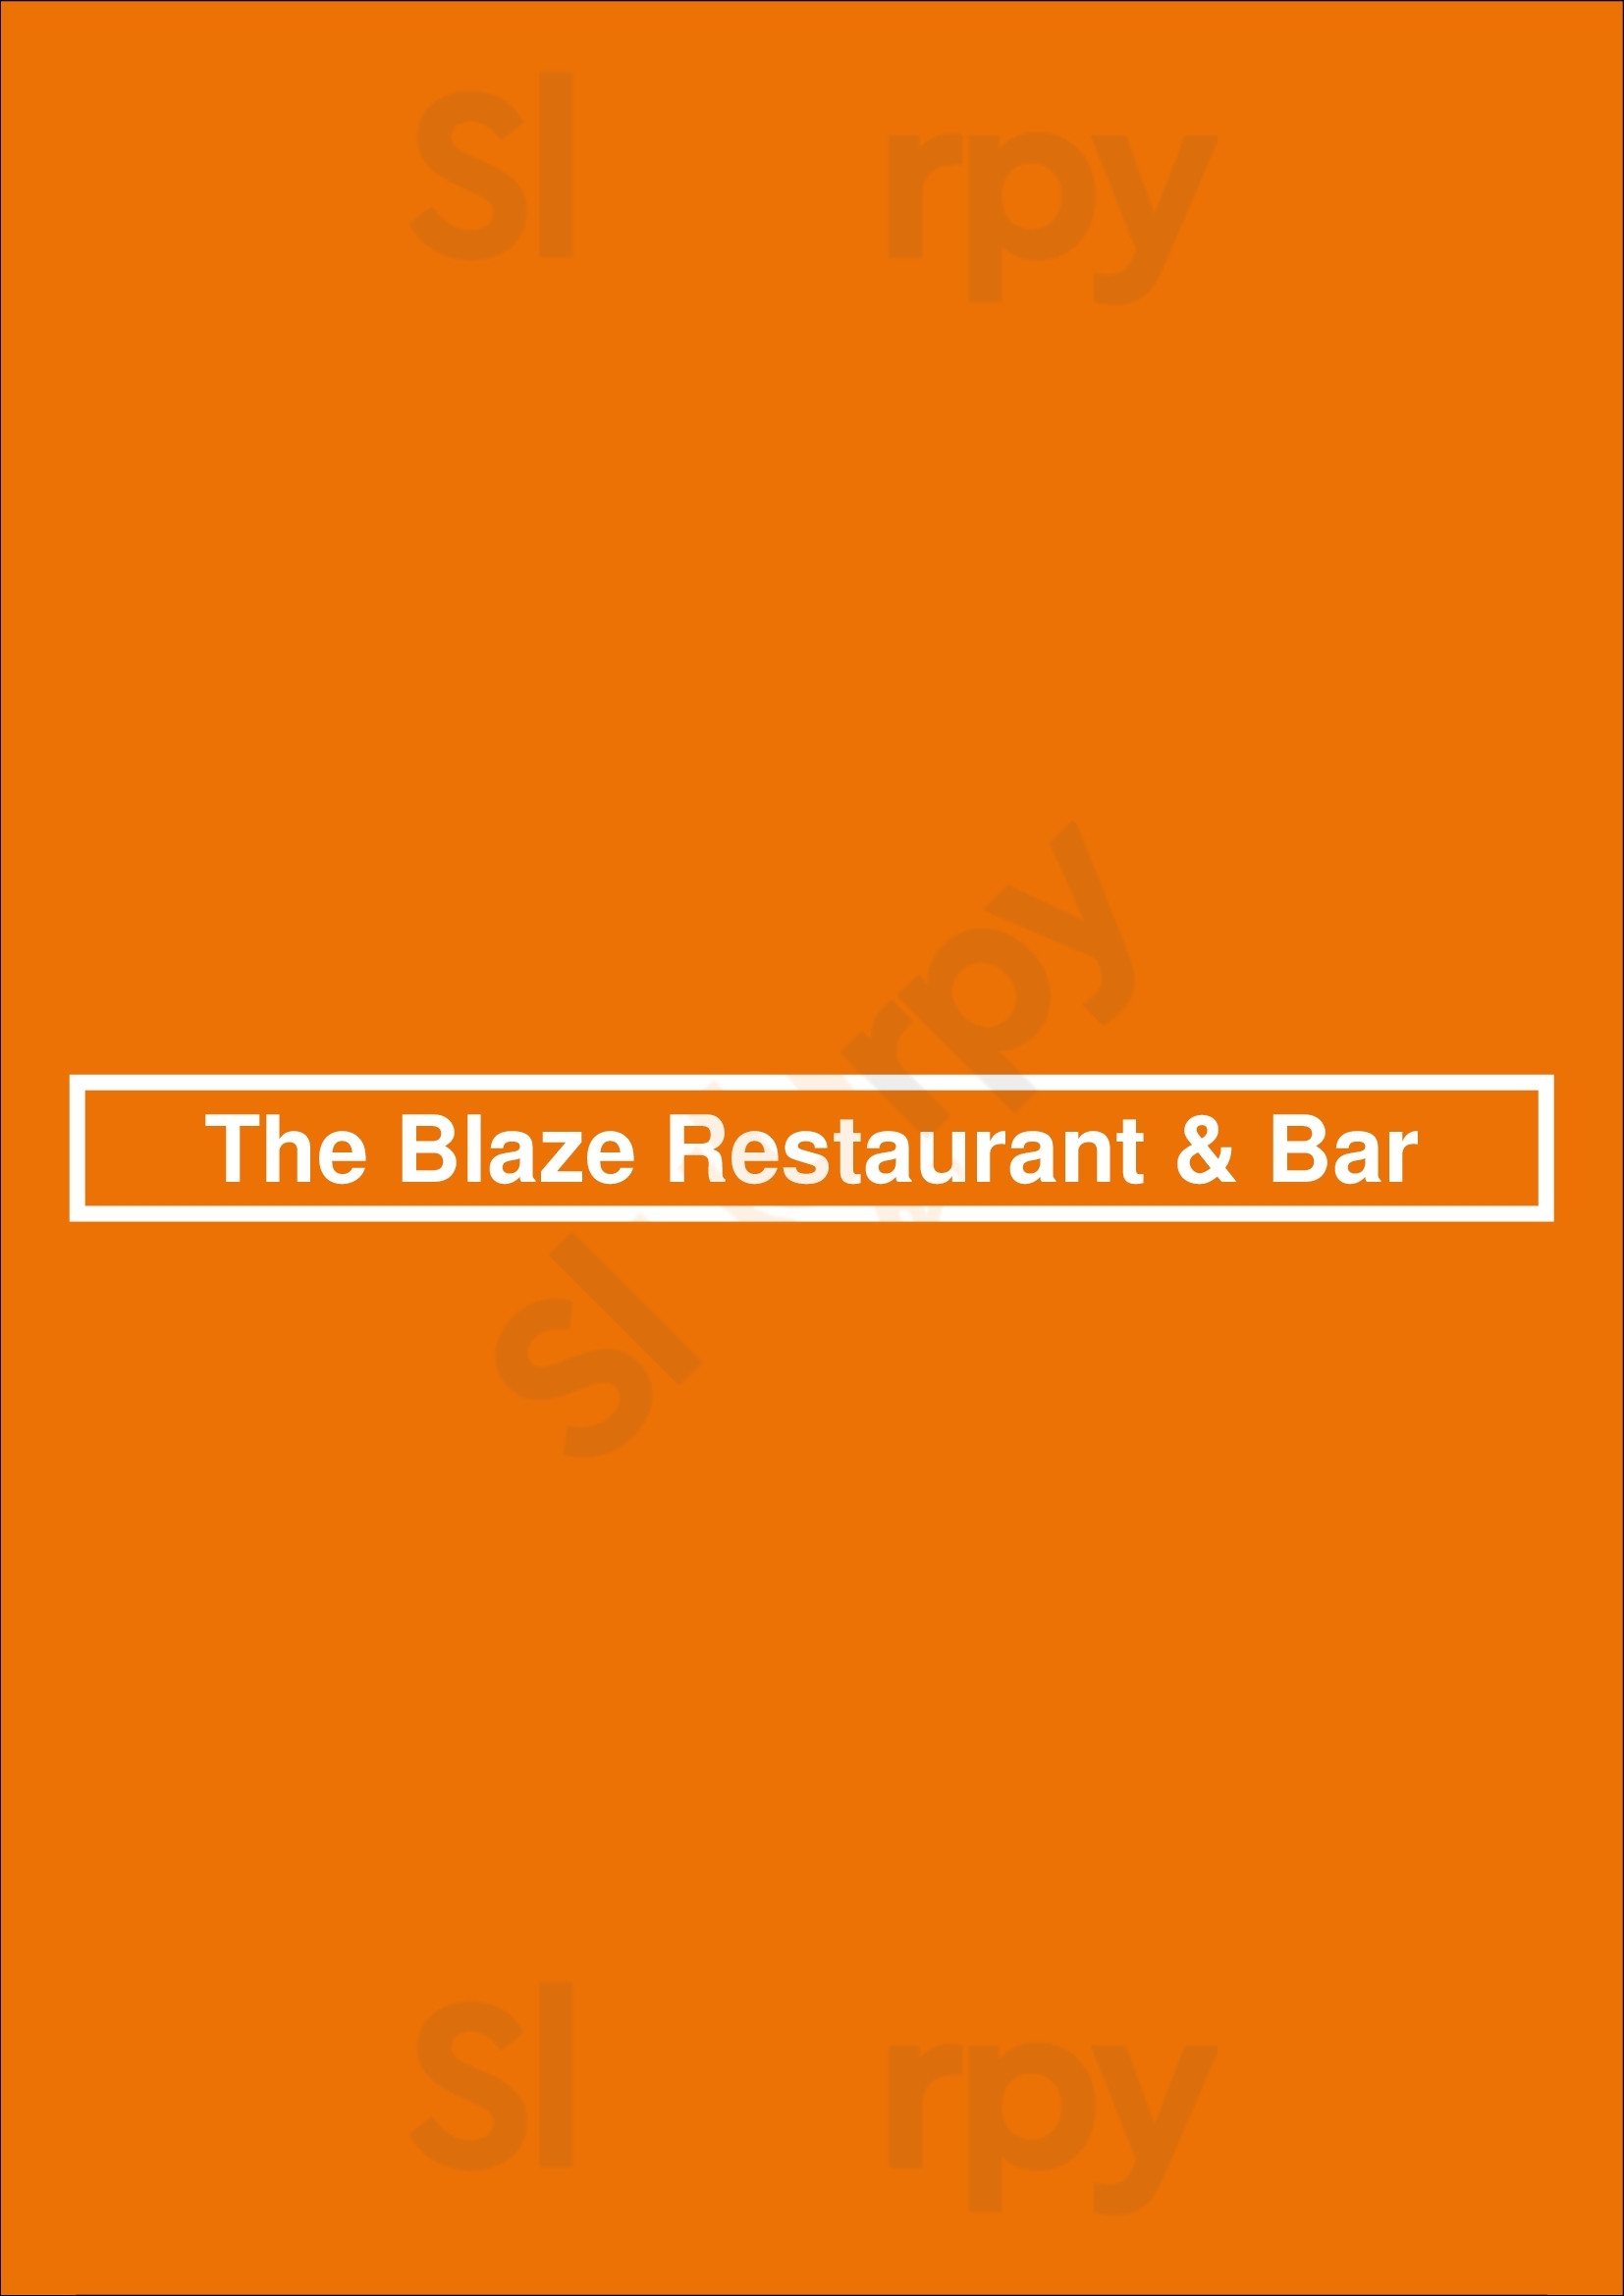 The Blaze Restaurant & Bar Chelmsford Menu - 1